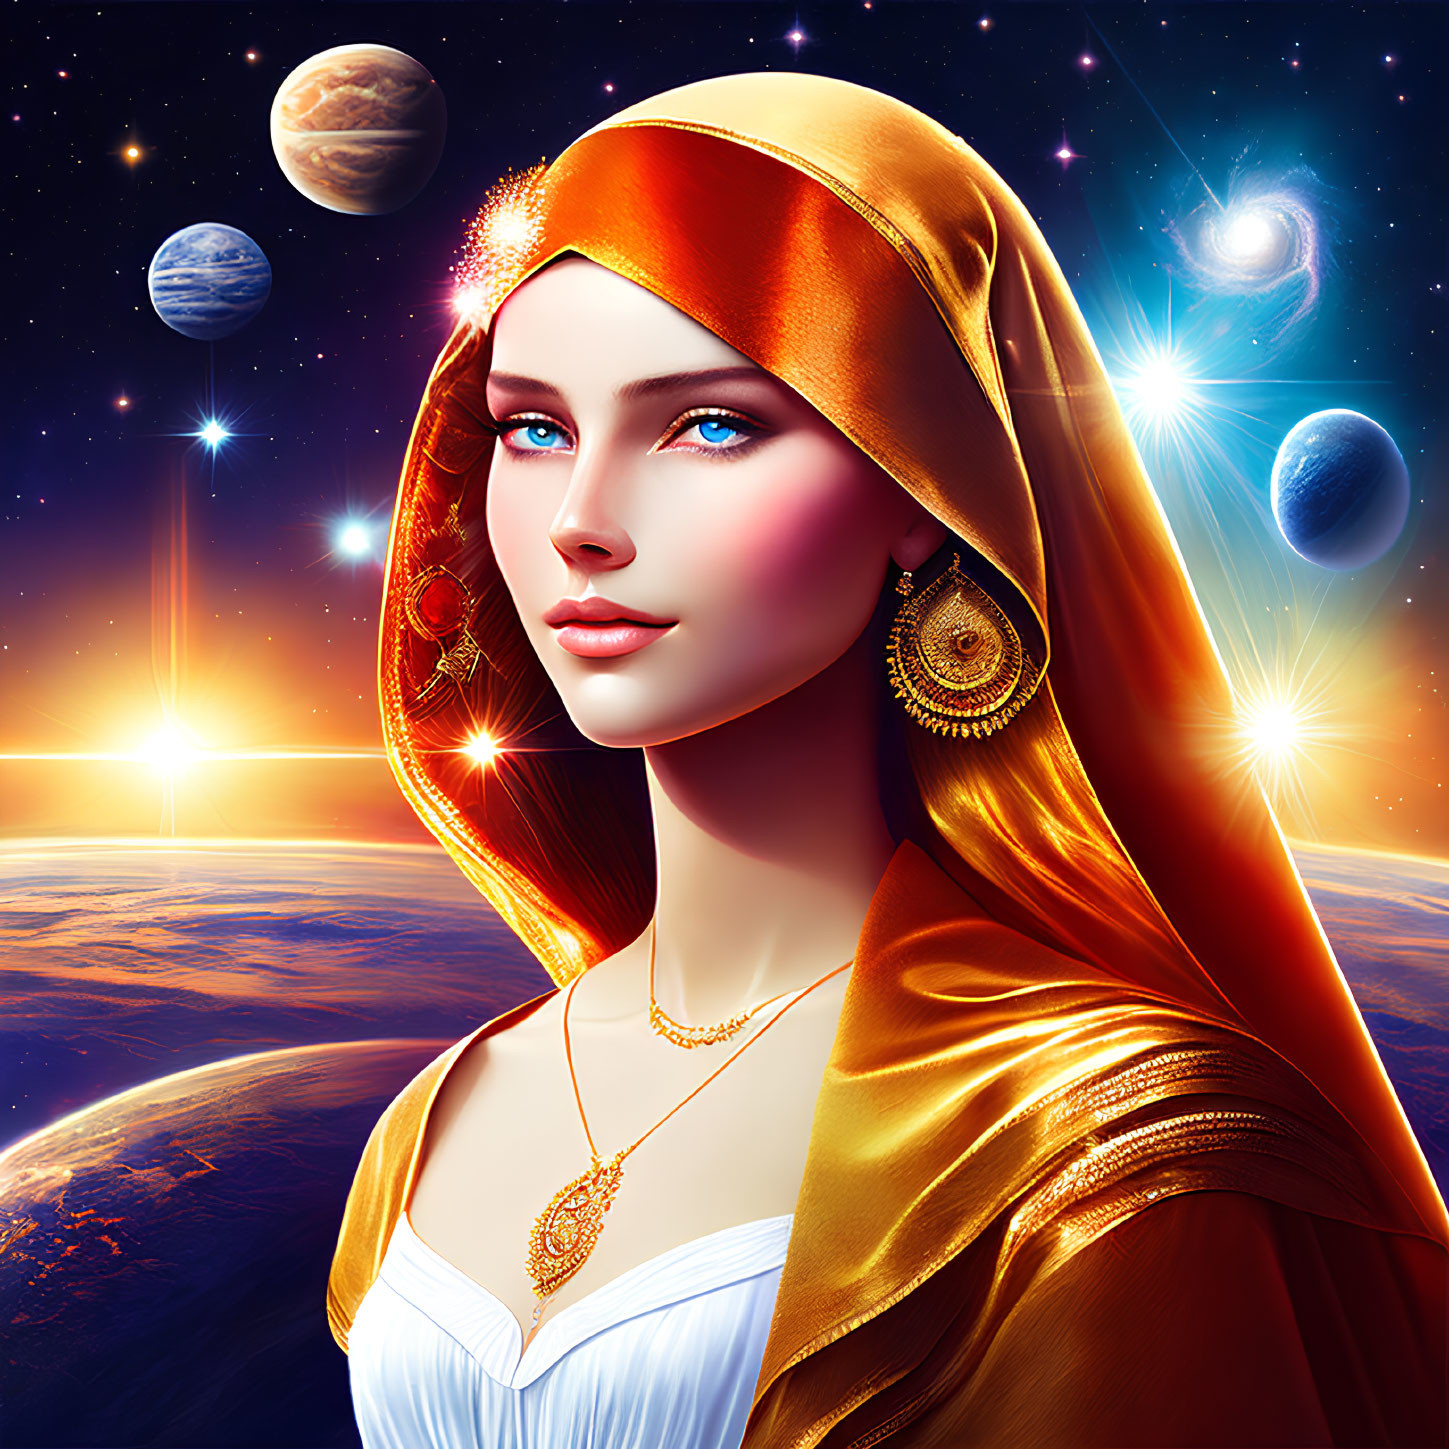 Digital artwork: Woman in golden headscarf with cosmic backdrop.